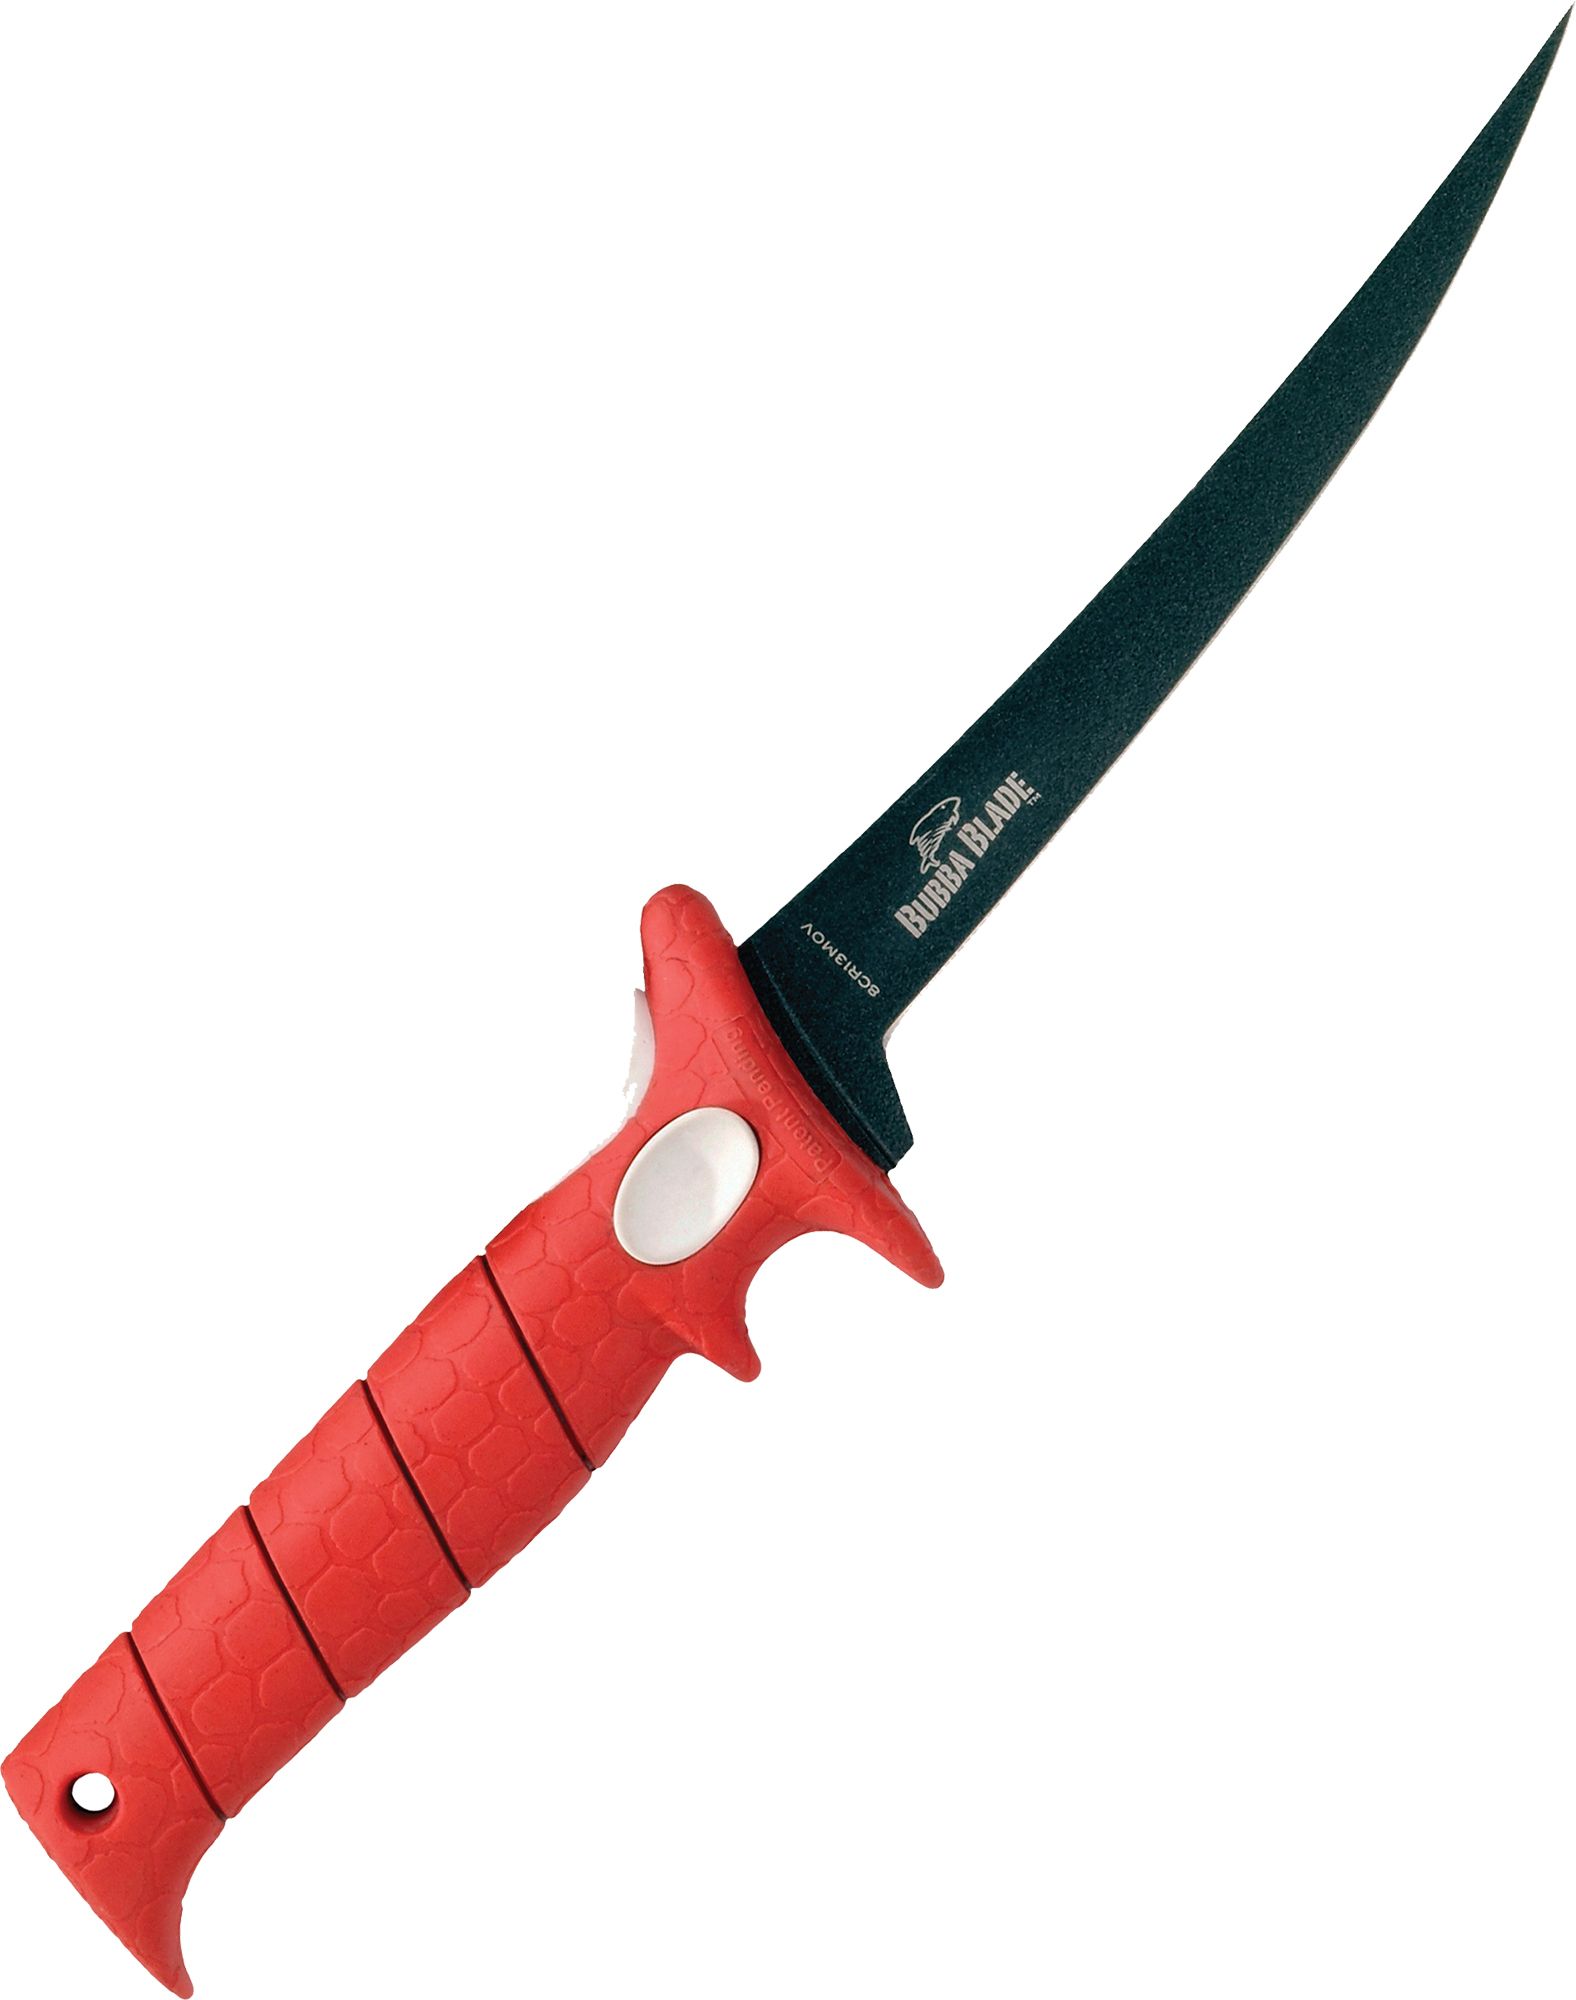 Bubba saltwater Multi-Flex Interchangeable Knife Set – Hook and Arrow